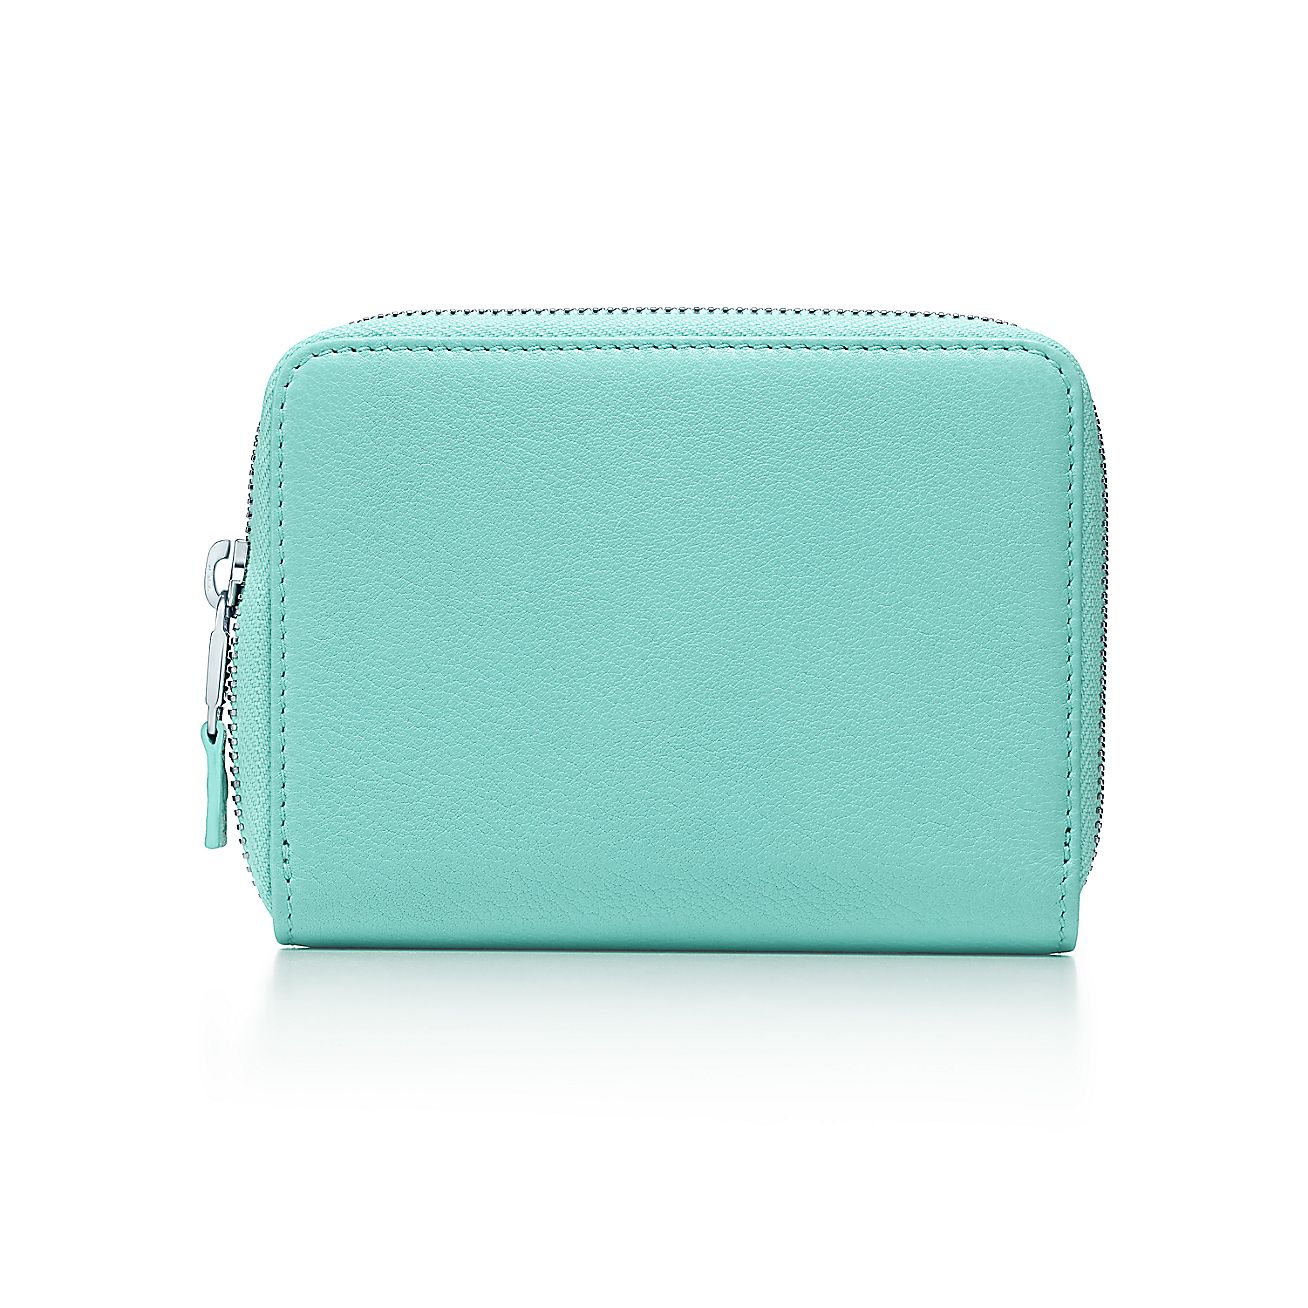 Tiffany smart zip wallet in Tiffany Blue grain leather. More colours ...